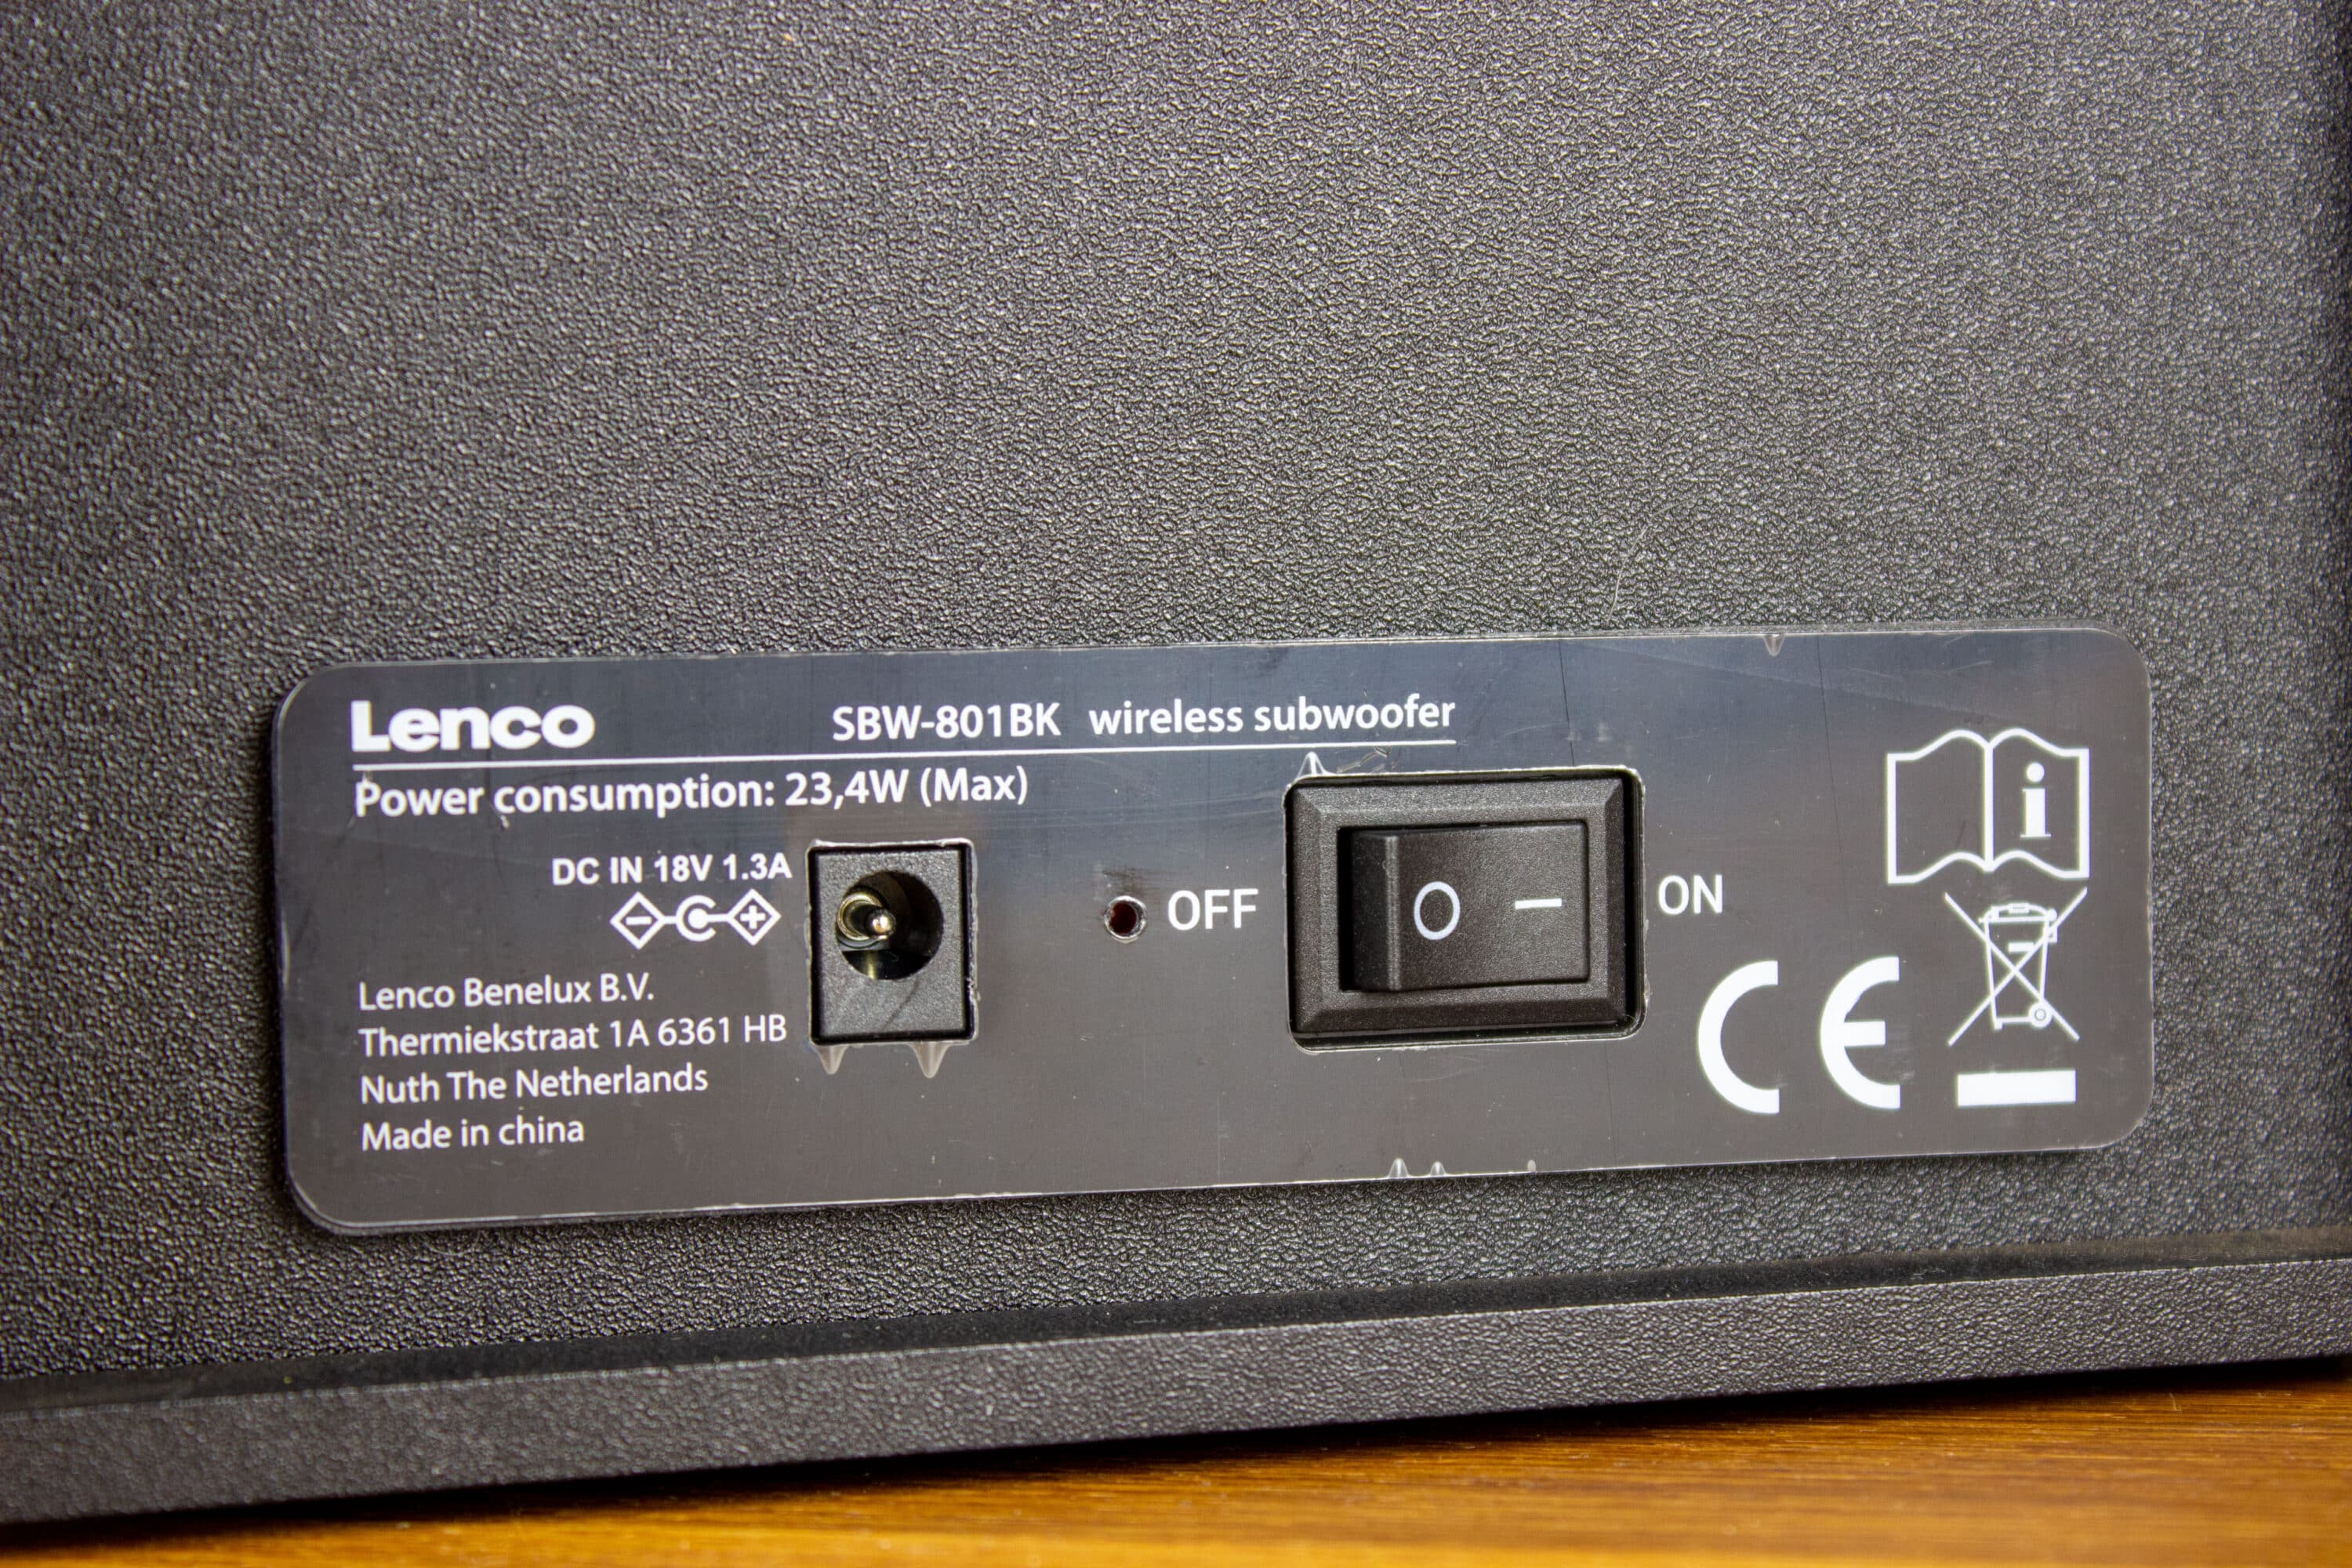 SBW-801BK average, inexpensive Lenco soundbar review: